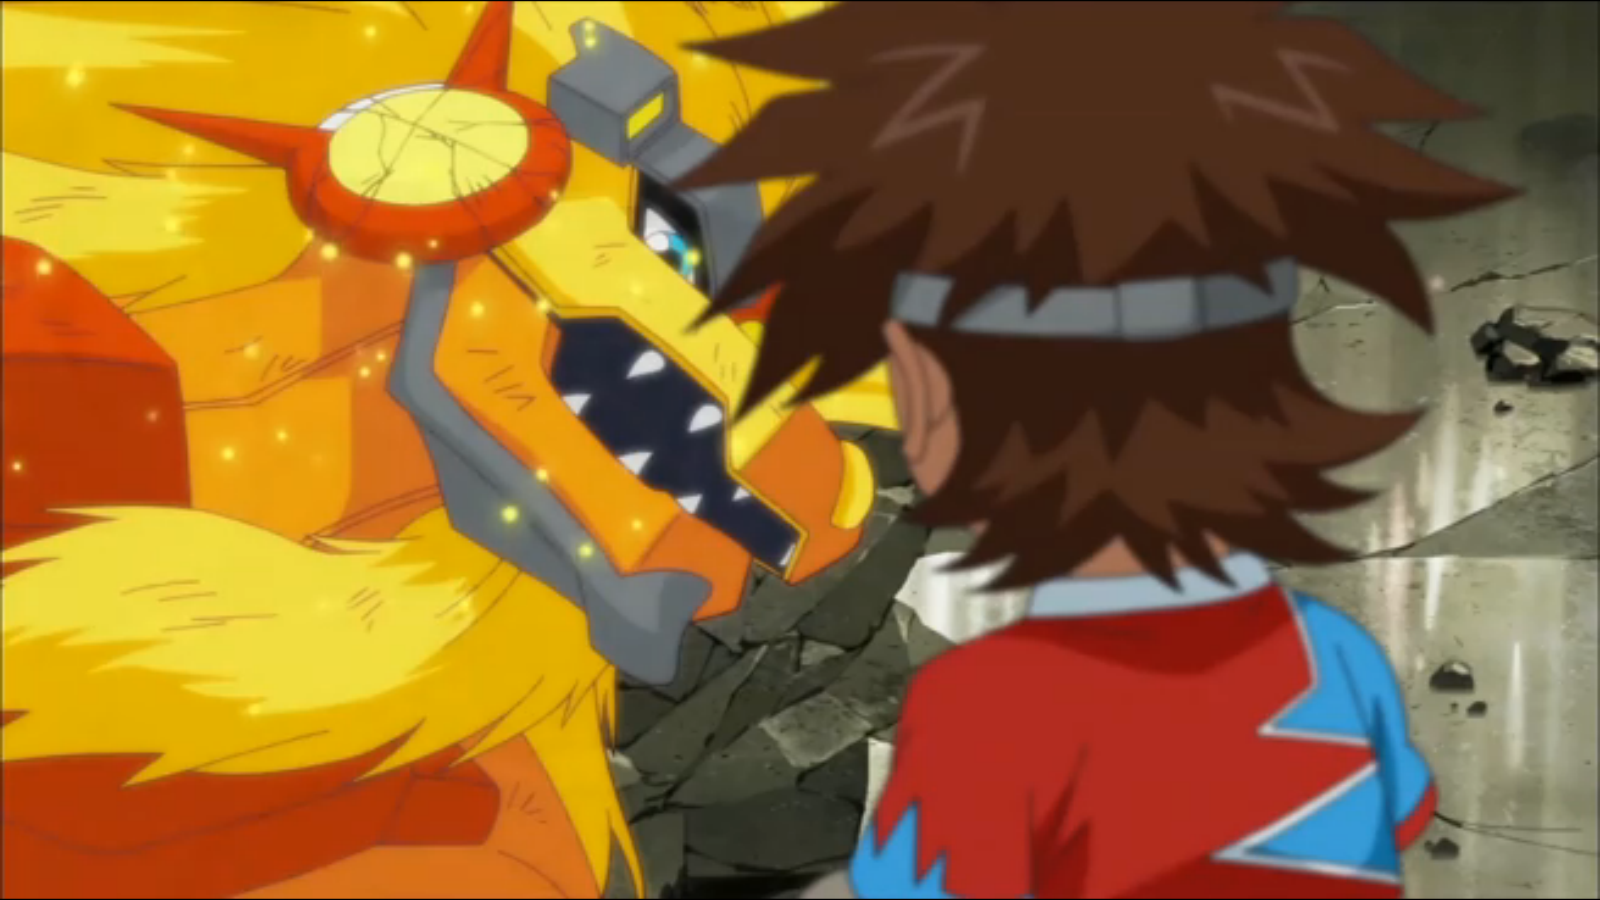 Digimon: System Restore